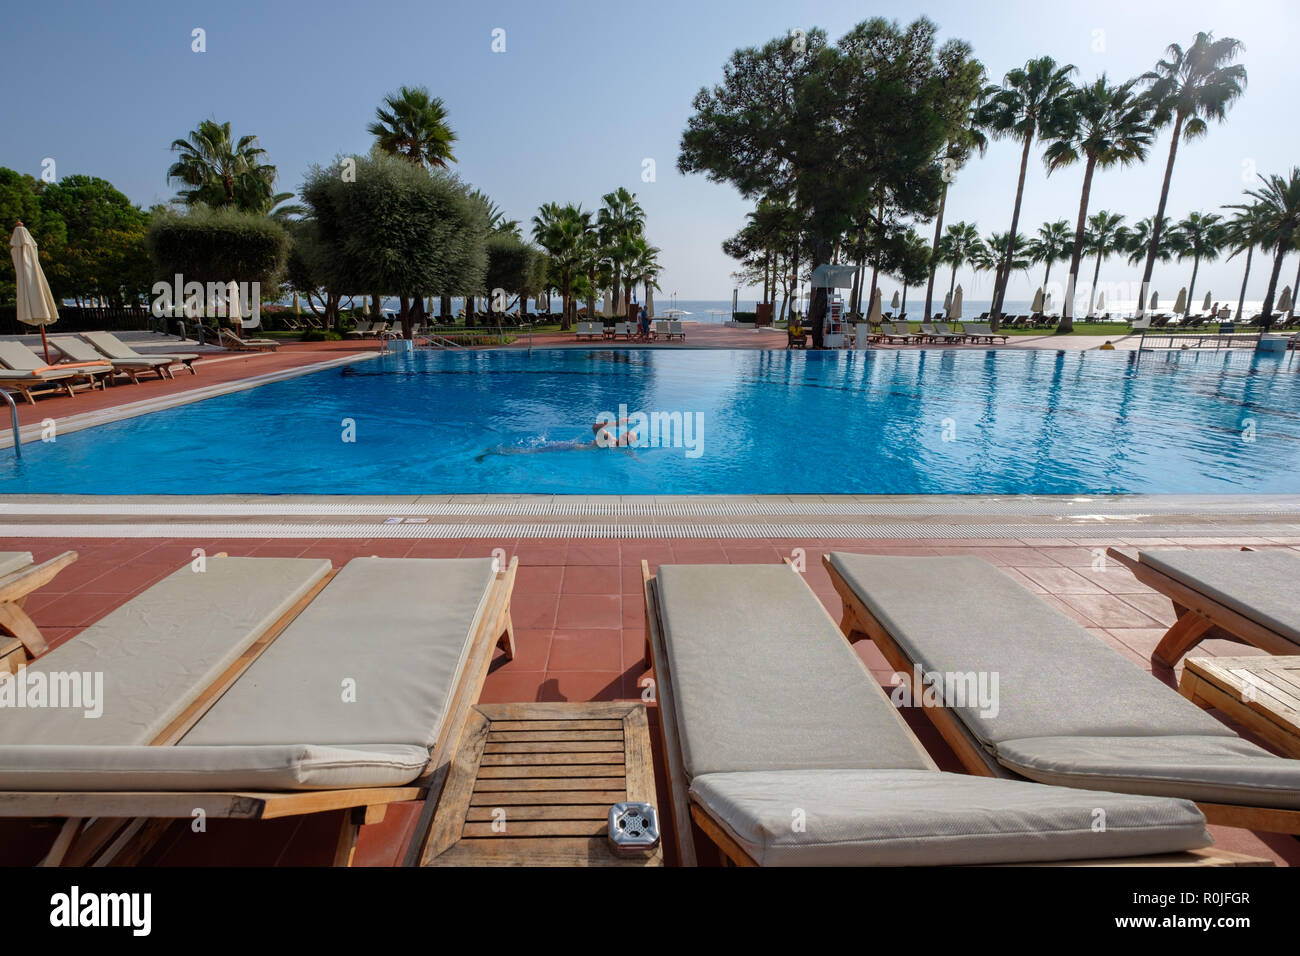 Uomo di nuoto in piscina presso il Club Med Palmiye luxury resort all inclusive, Kemer, Antalya, Turchia Foto Stock